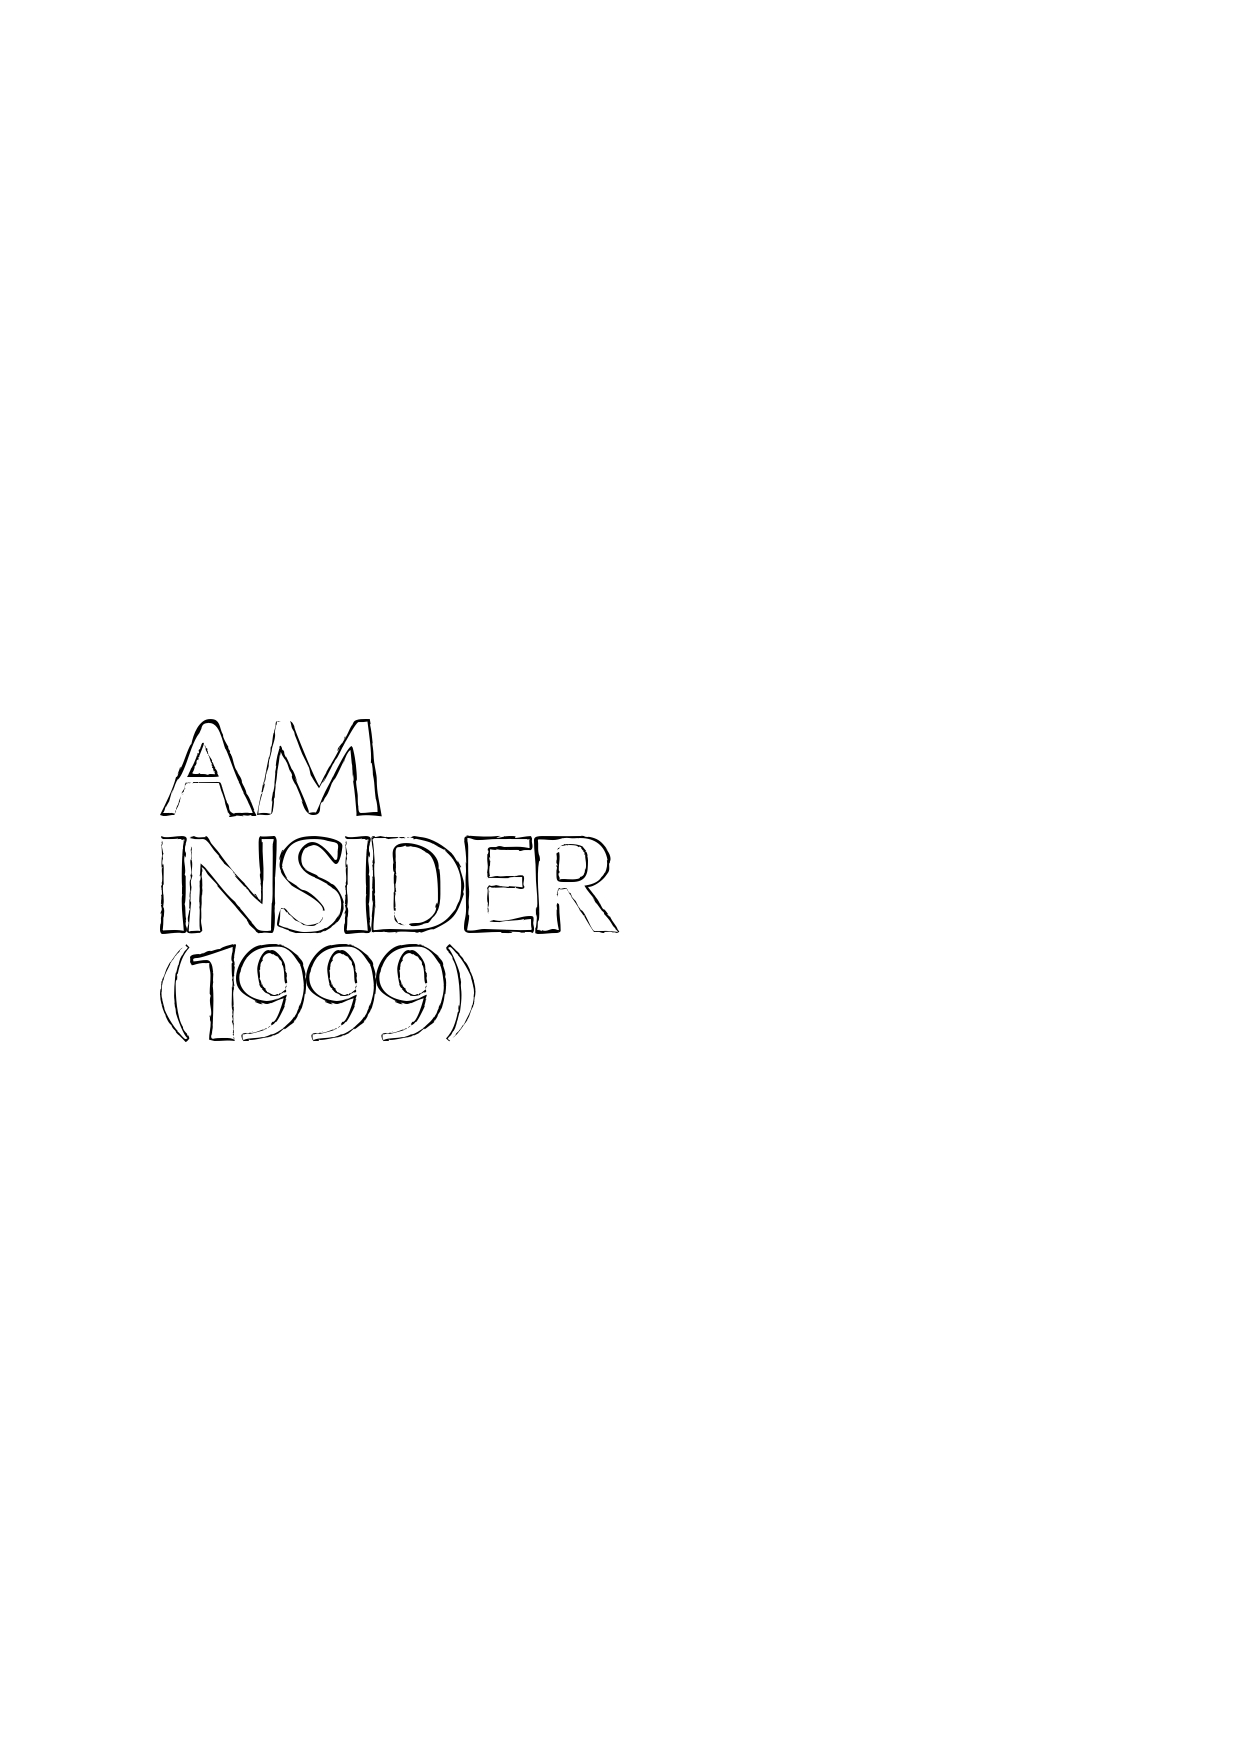 AM(insider)1999